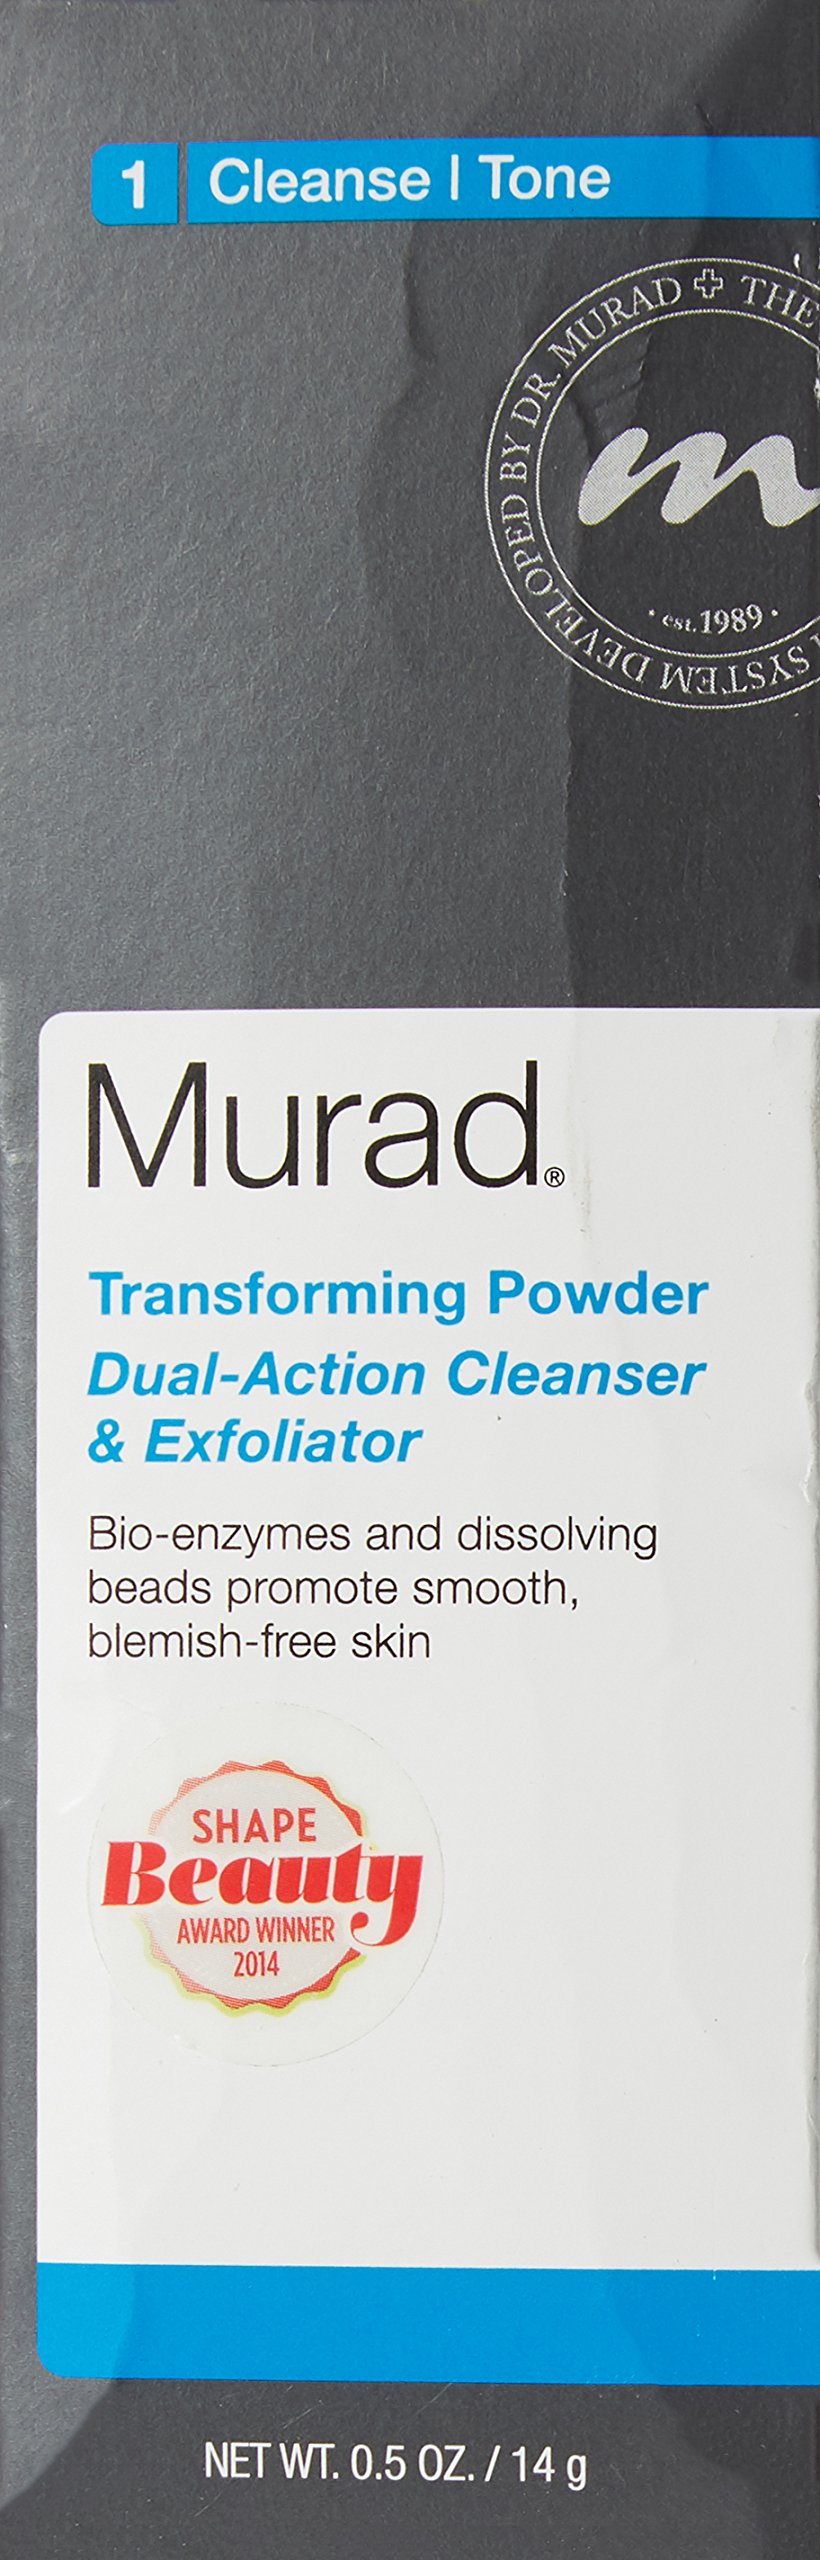 Murad Transforming Powder Dual-Action Cleanser & Exfoliator 0.5oz - image 2 of 7